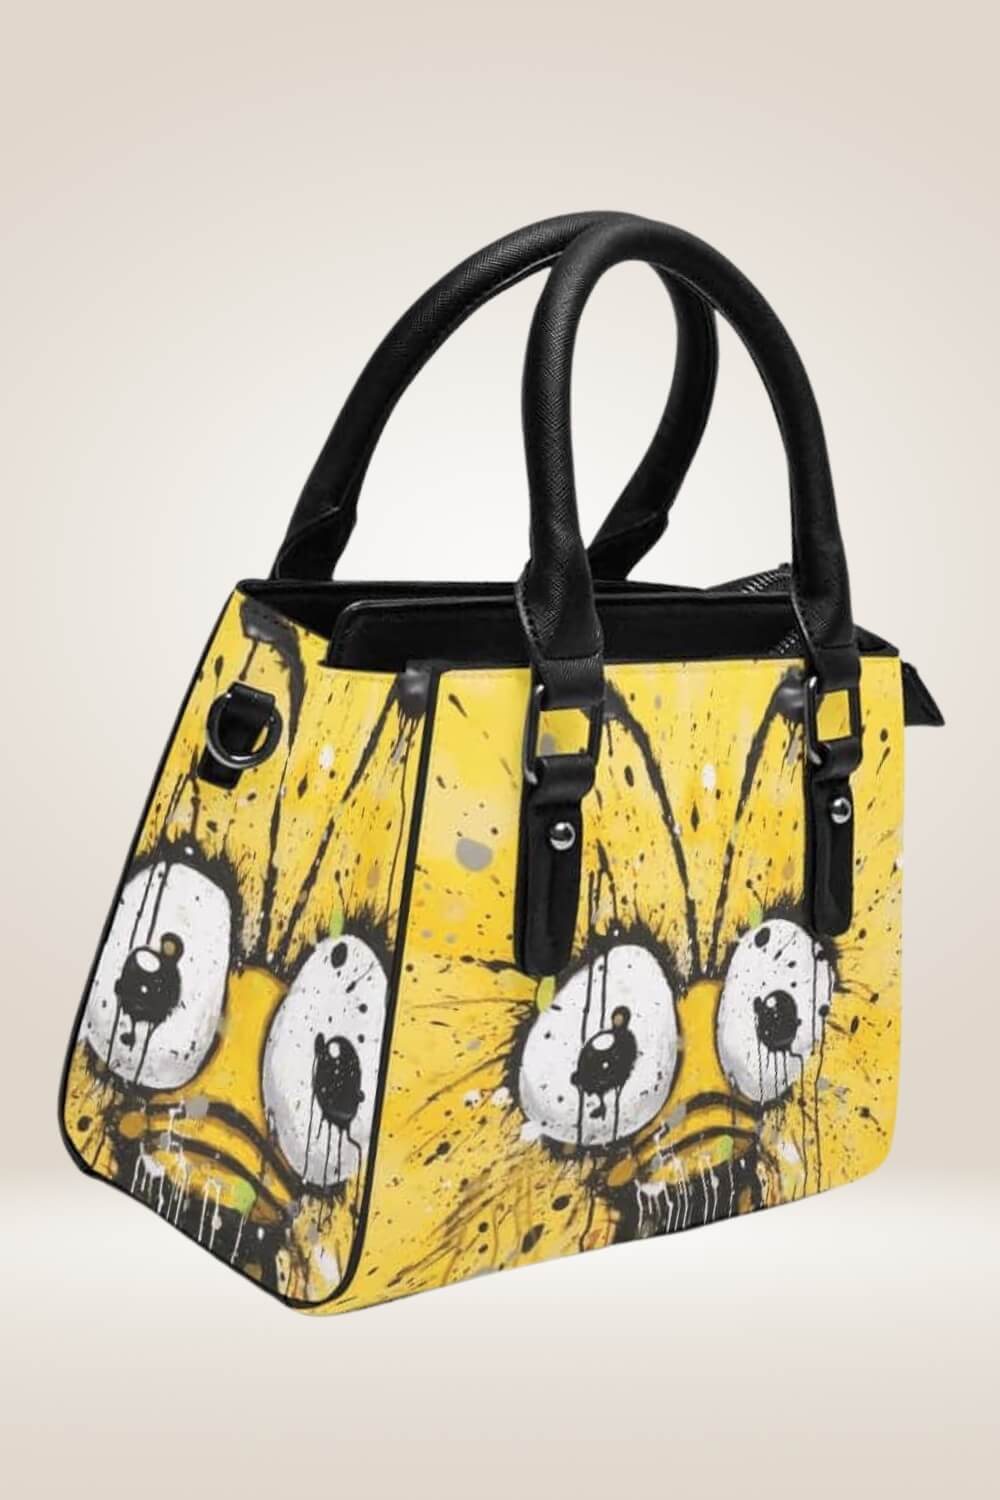 Graffiti Bug Yellow Satchel Bag - TGC Boutique - Satchel Handbag